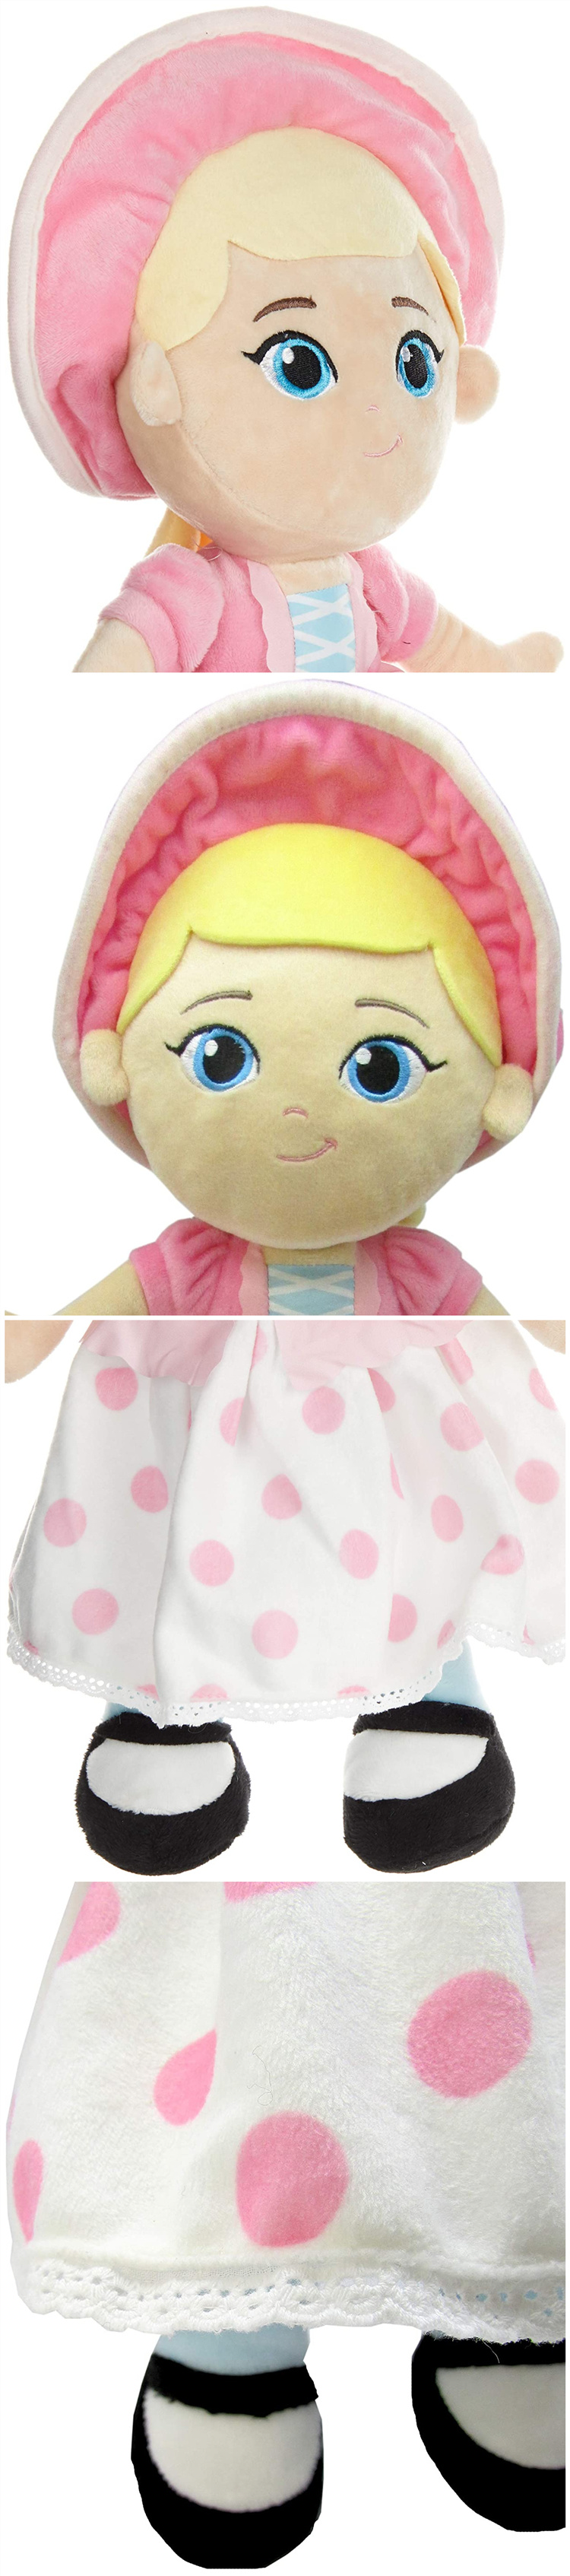 Kids Preferred Baby Story Stuffed Plush Custom Doll with Dressing